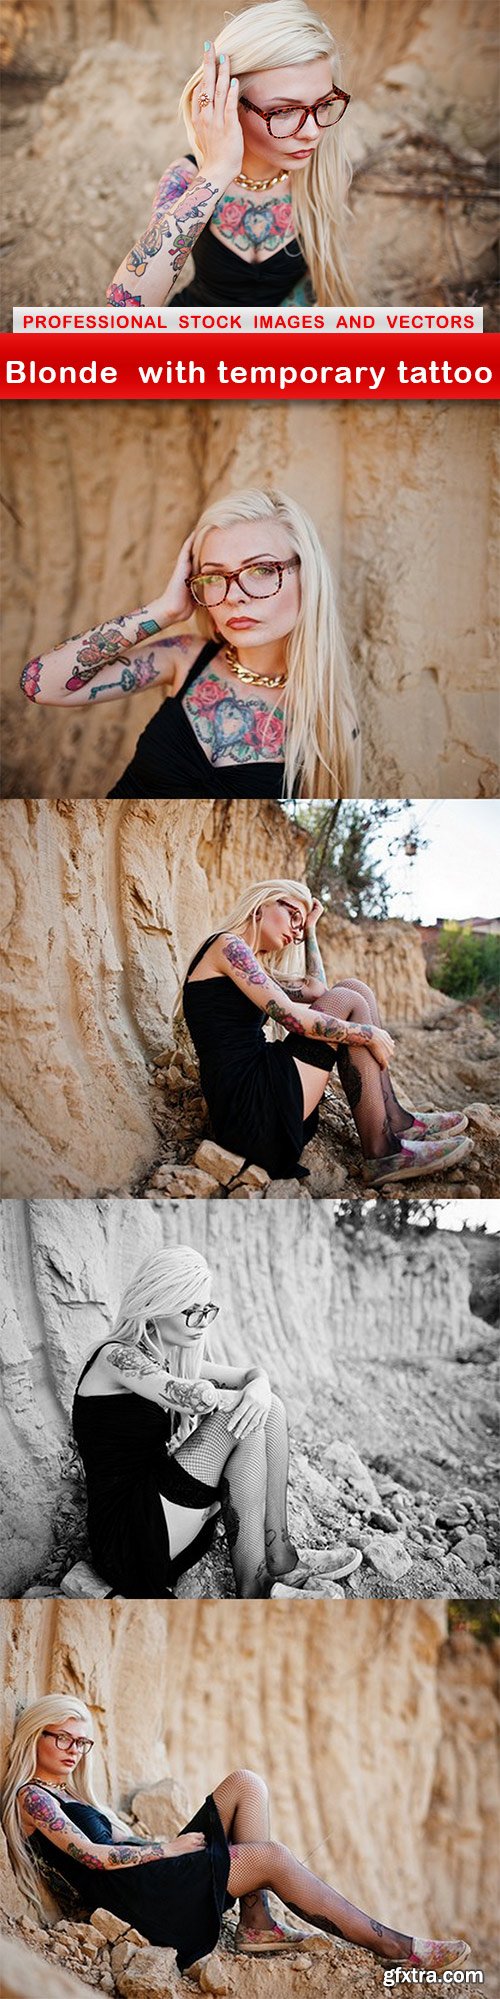 Blonde with temporary tattoo - 5 UHQ JPEG